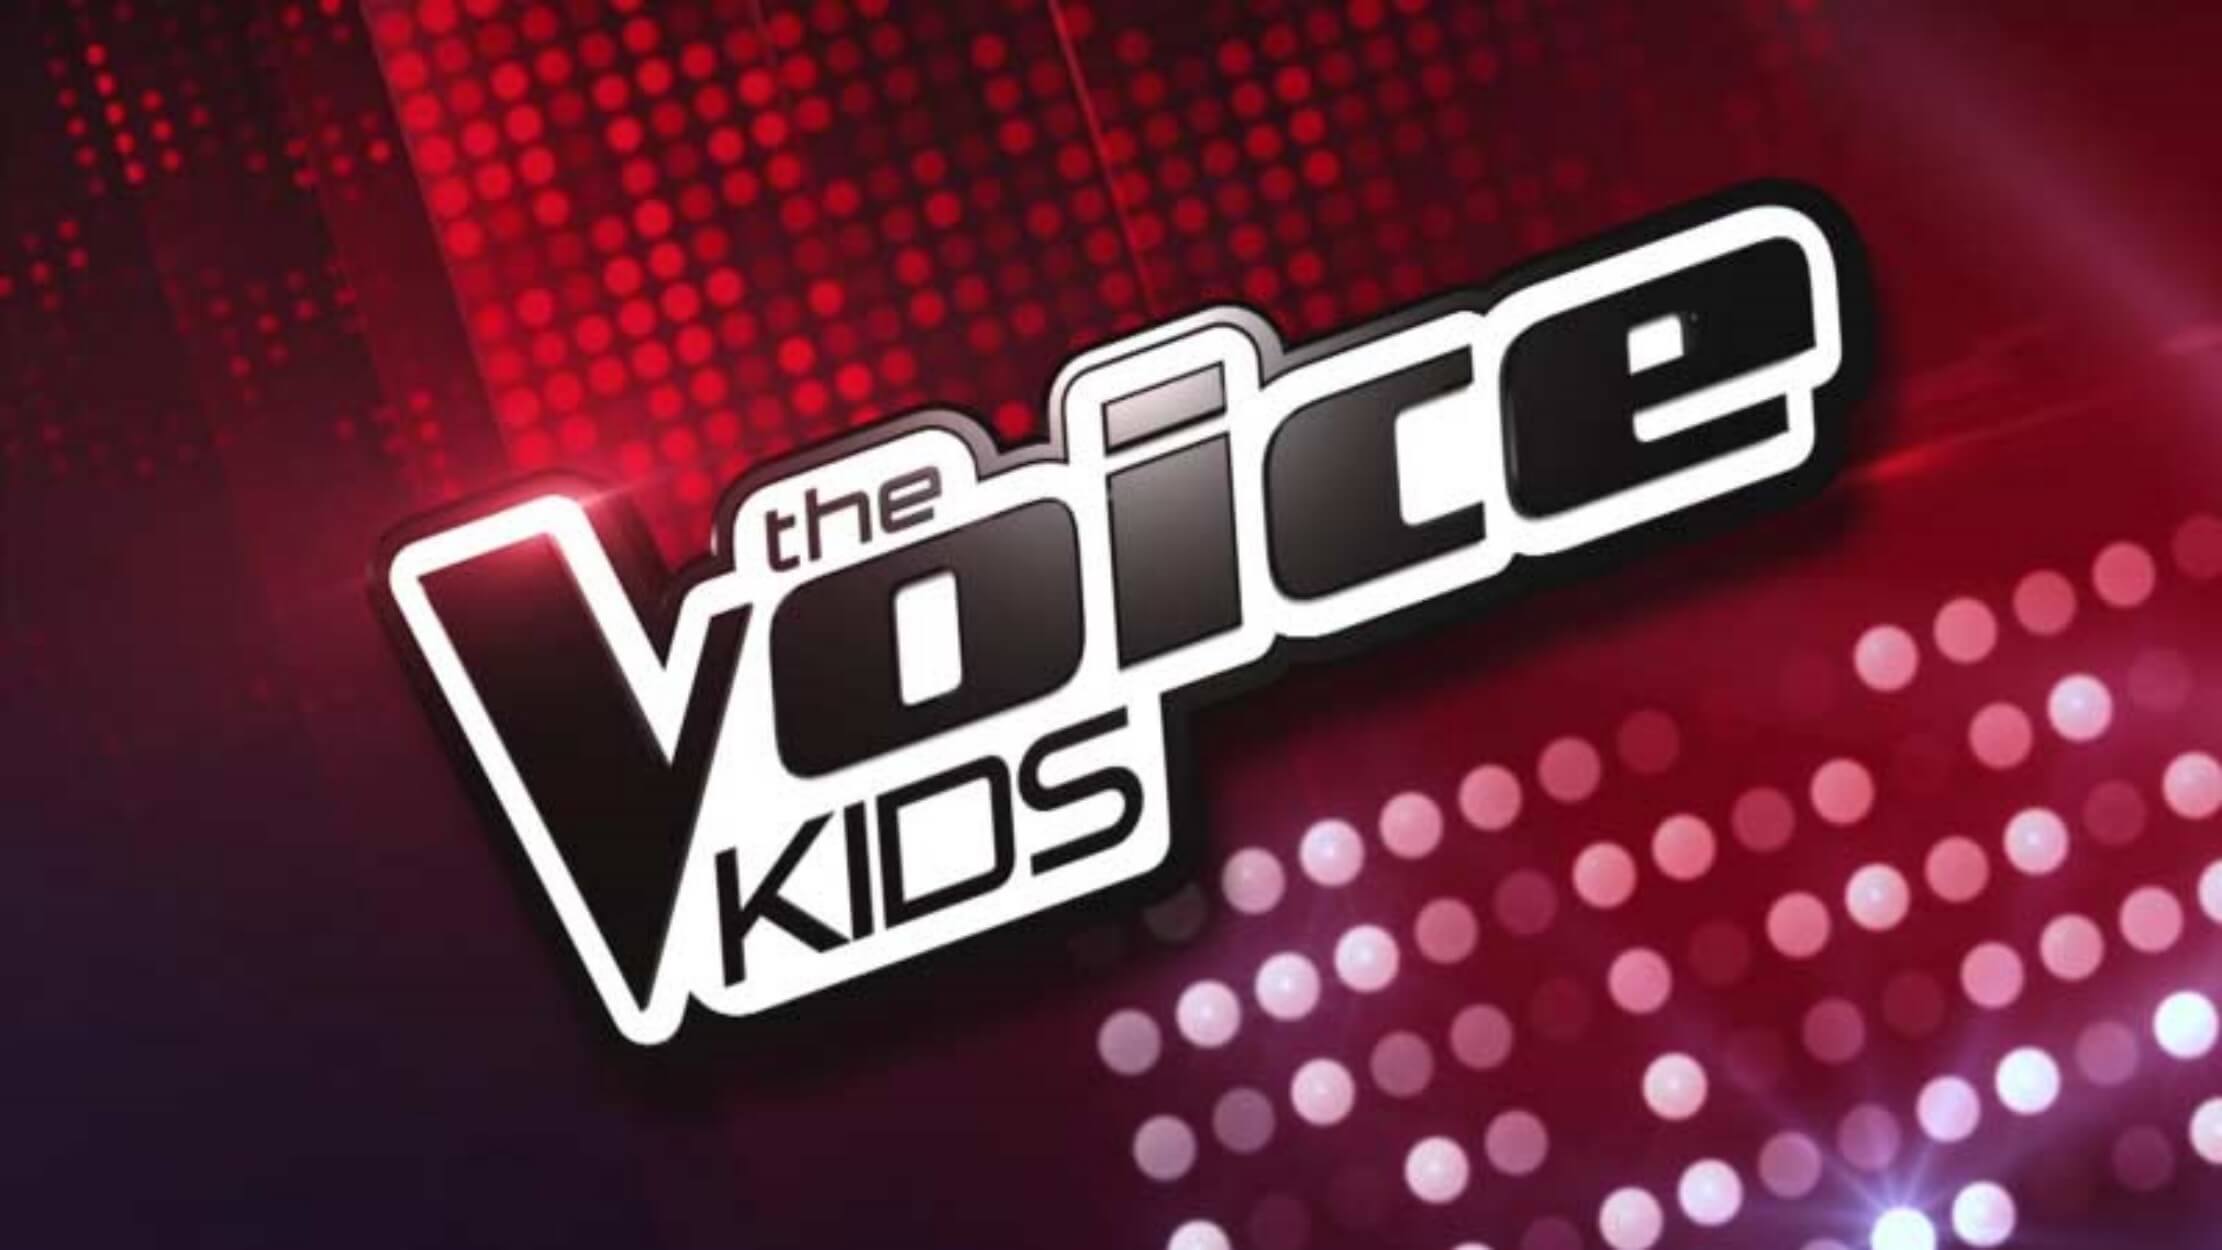 Voice aloud. Voice Kids. The Voices. Шоу голос логотип.